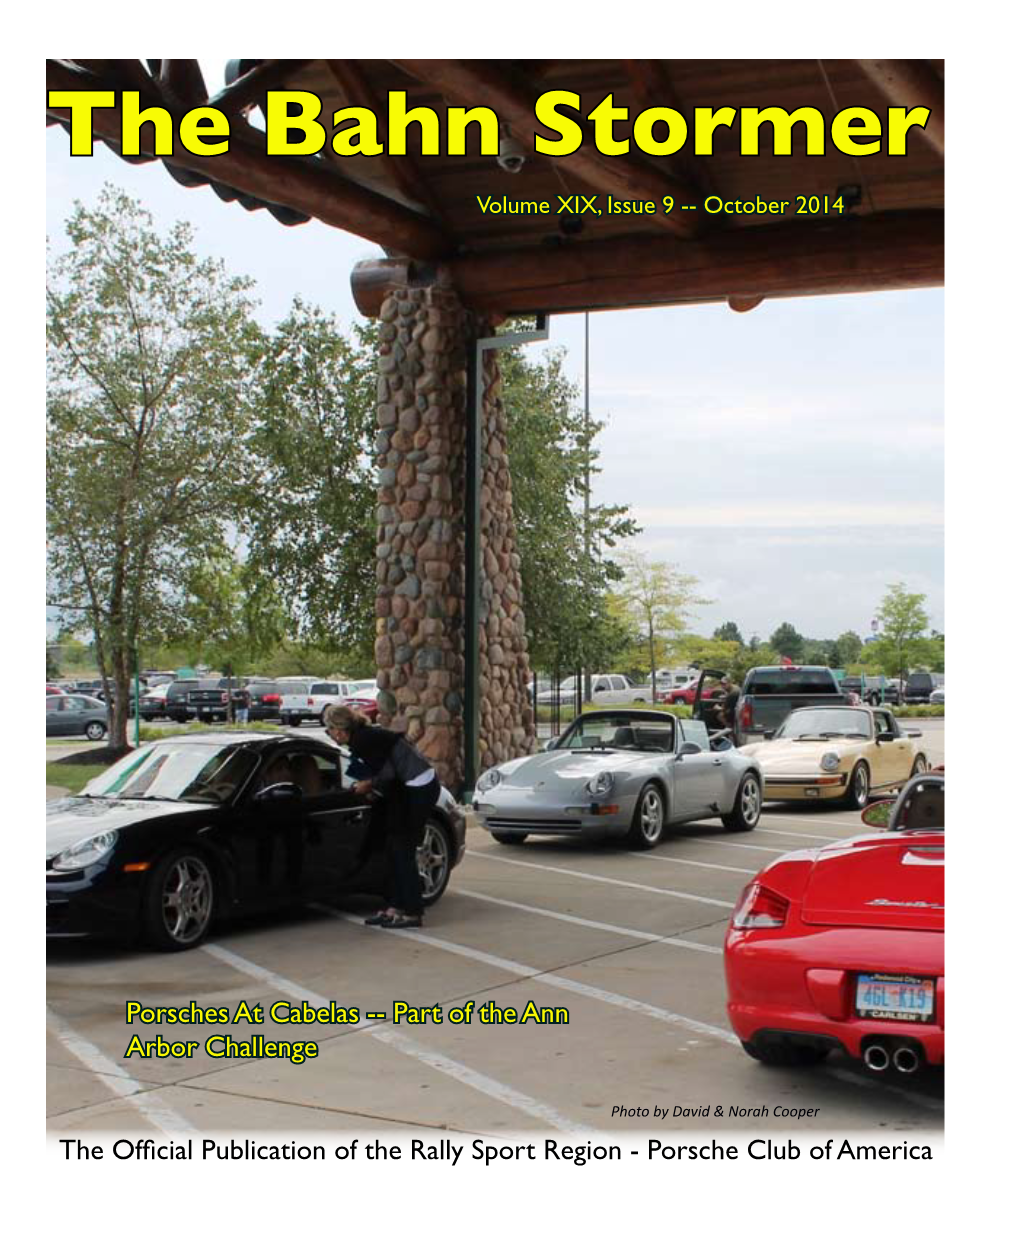 The Bahn Stormer Volume XIX, Issue 9 -- October 2014